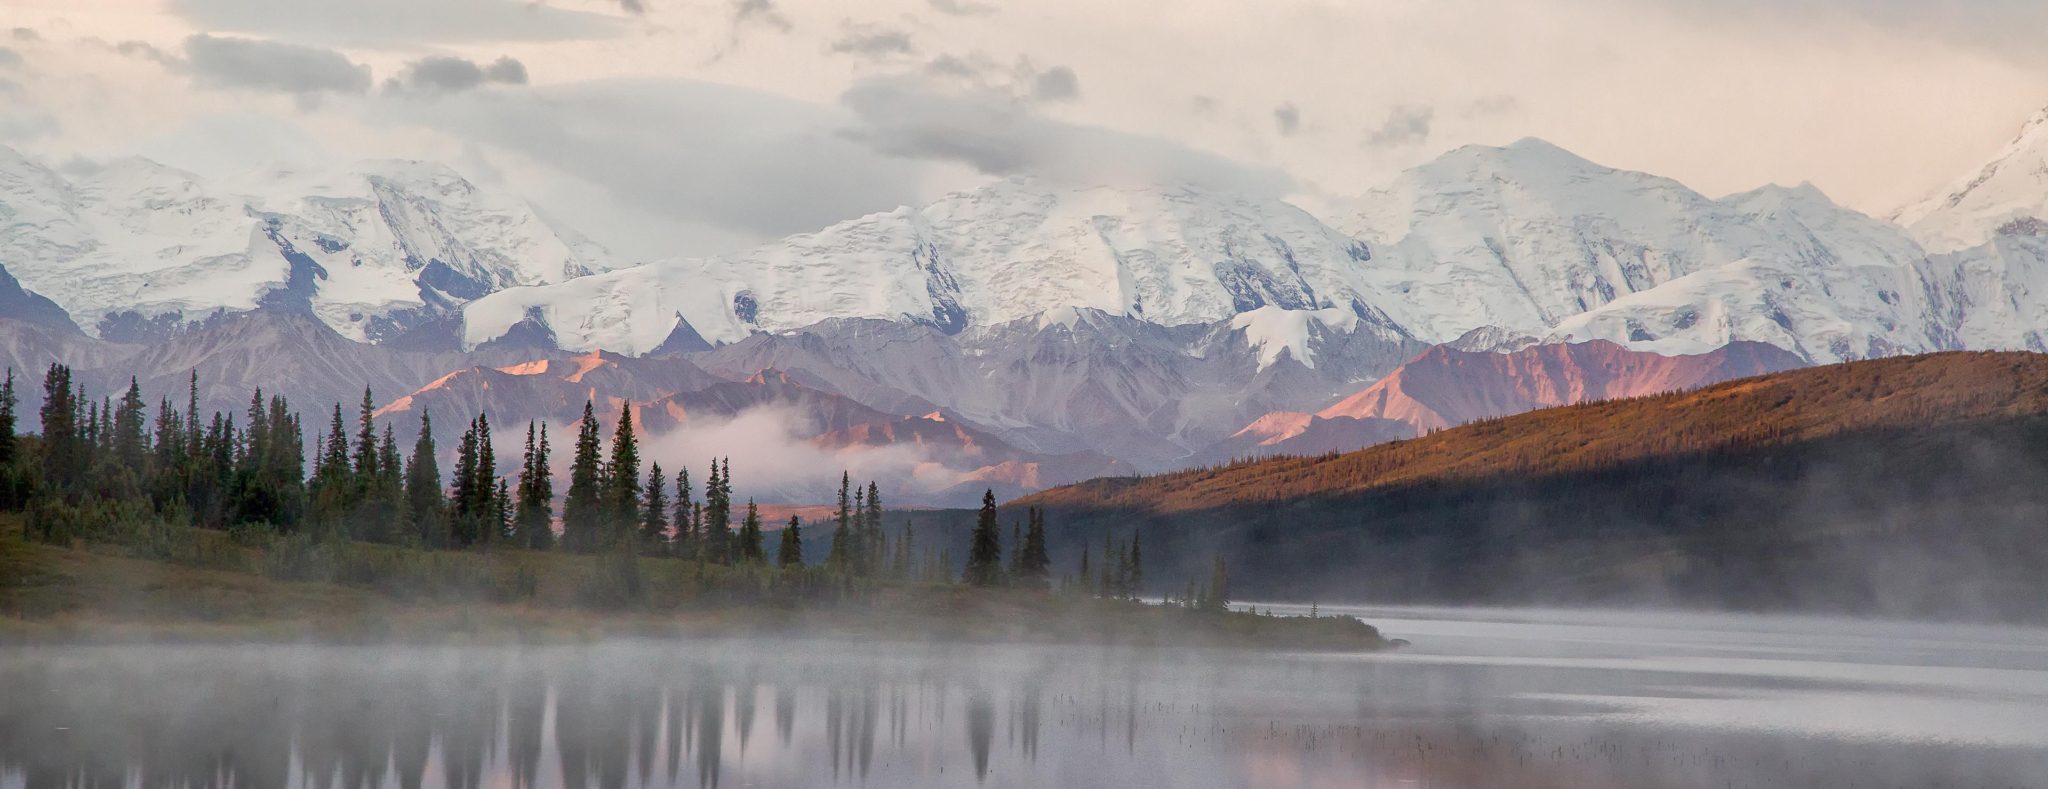 Creating Stories Alaska - foto: Menno Schaefer